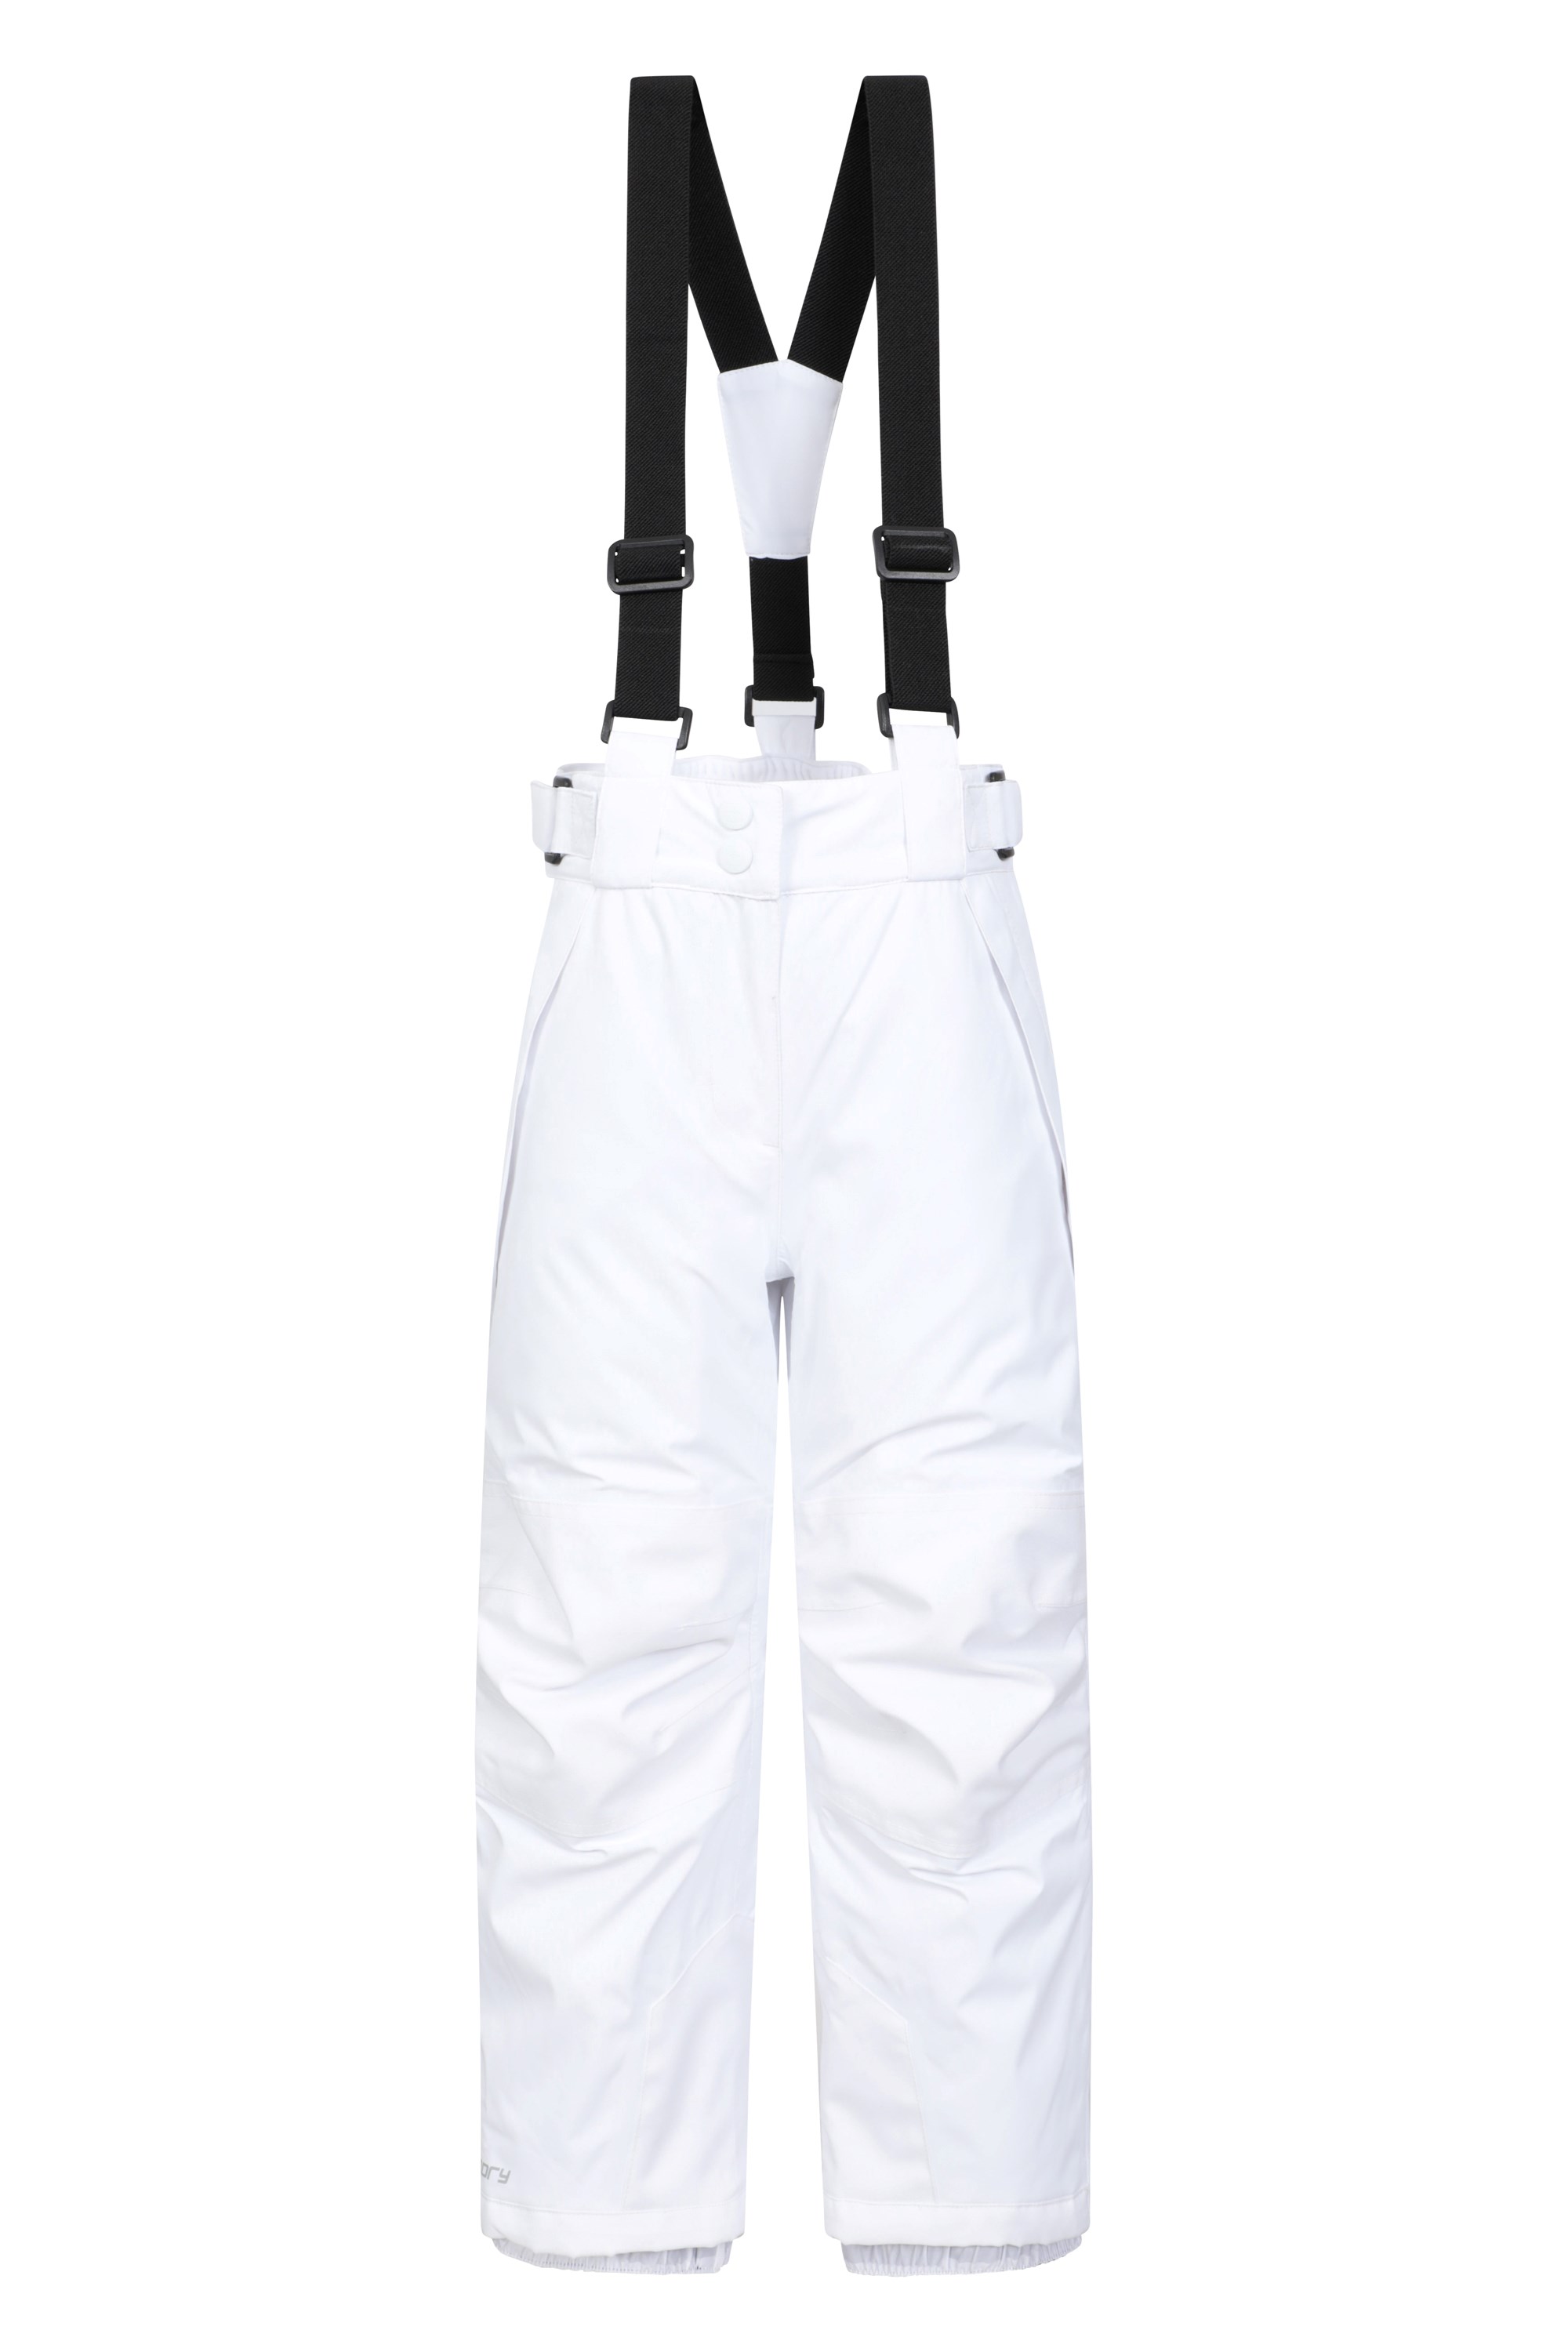 Falcon Extreme Kids Ski Pants - White